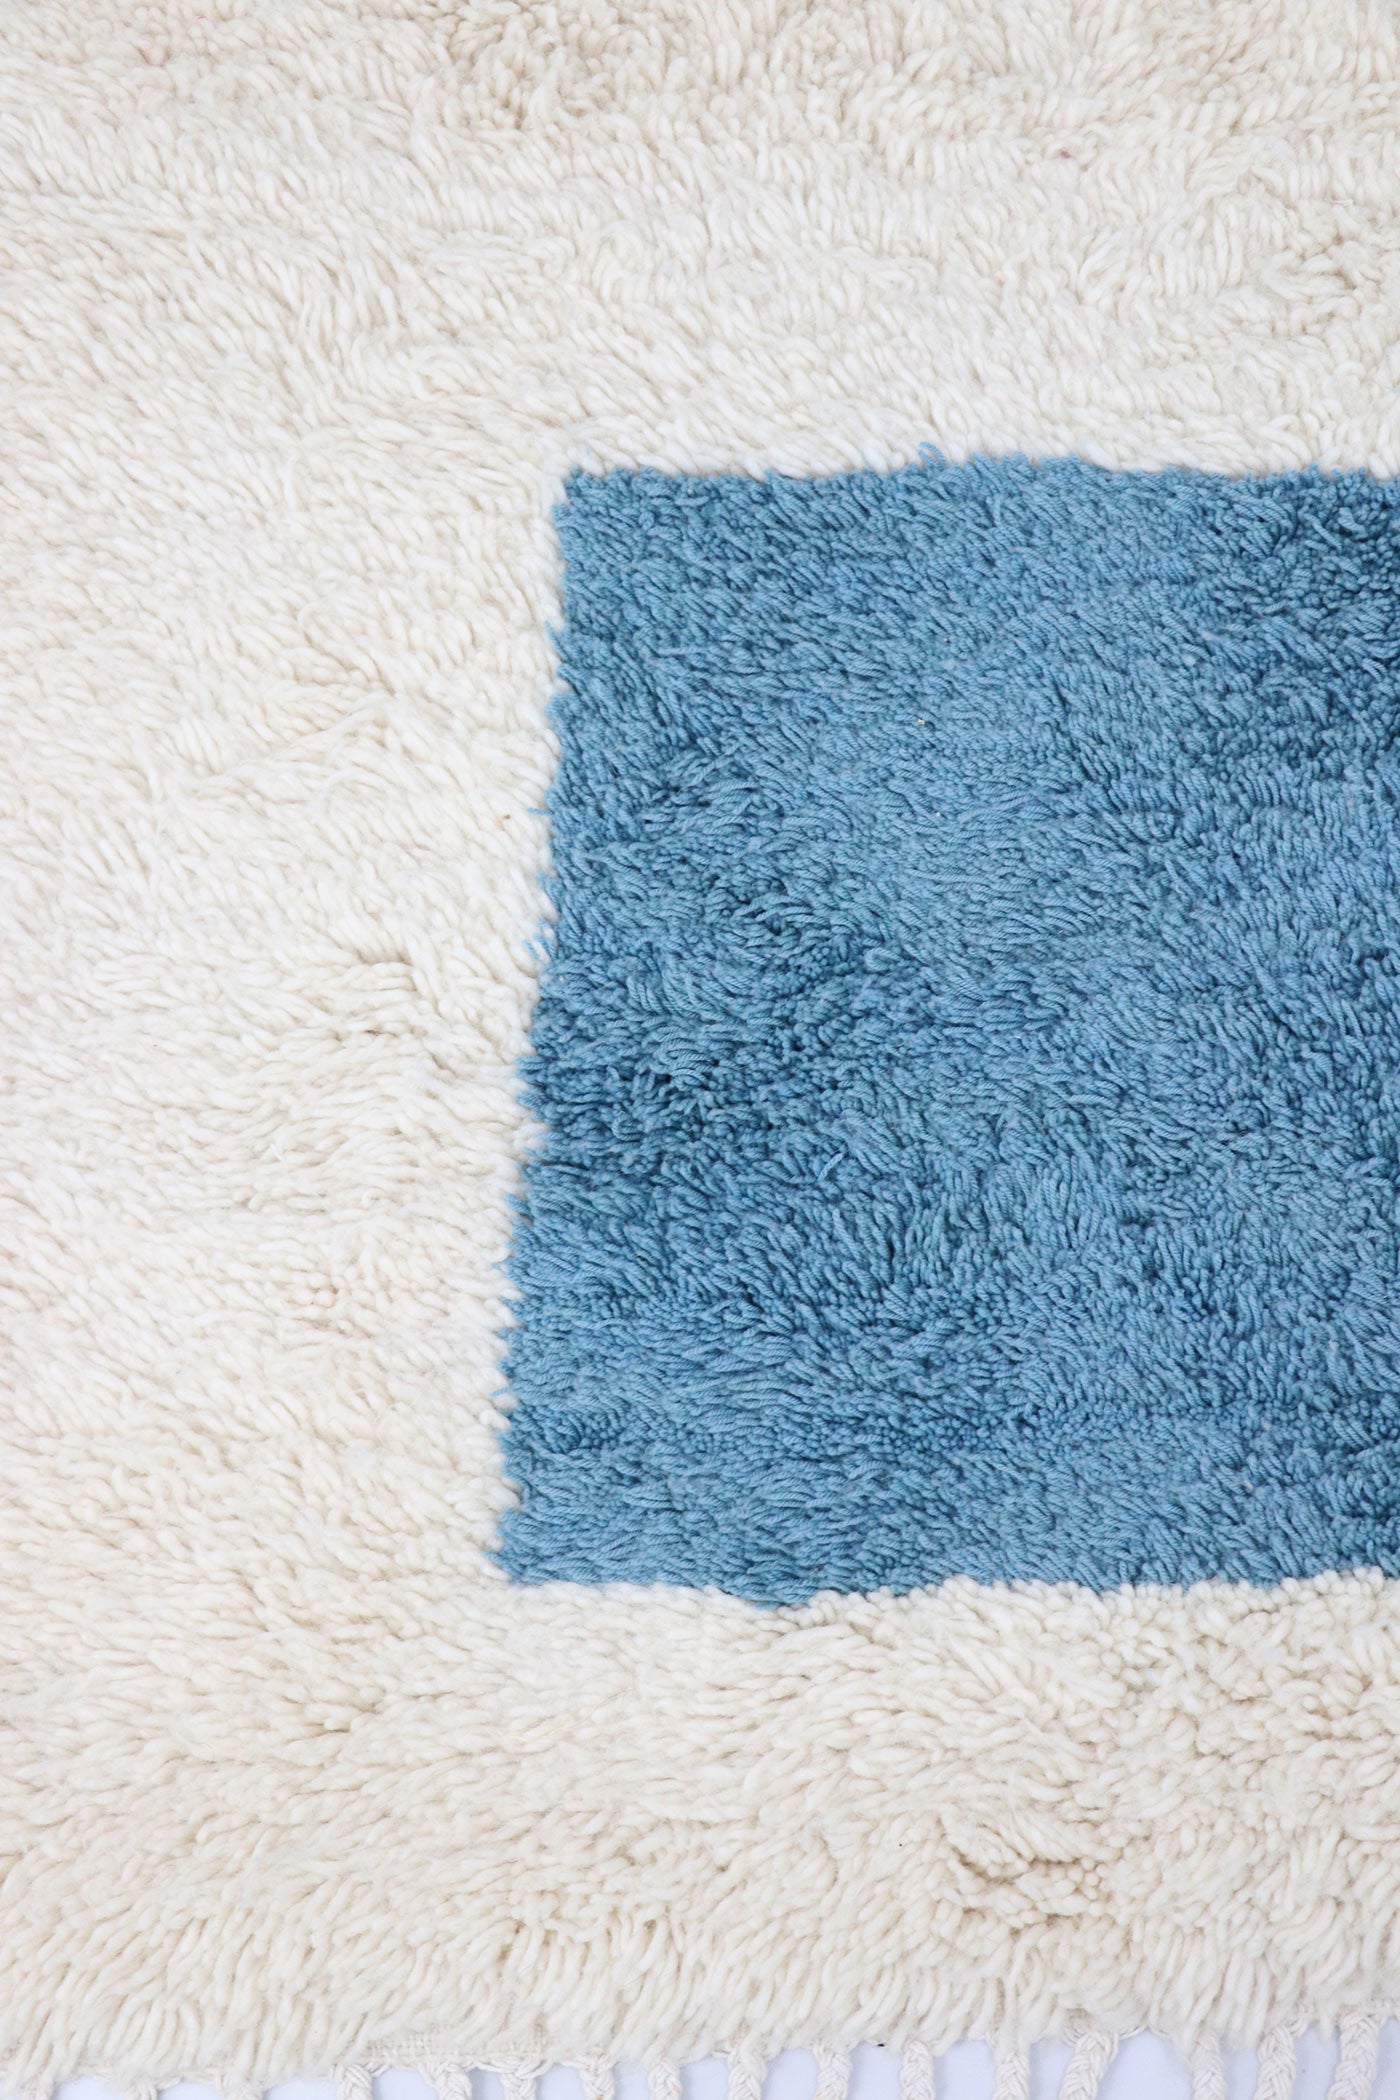 Azilal carpet white turquoise 165x240 cm